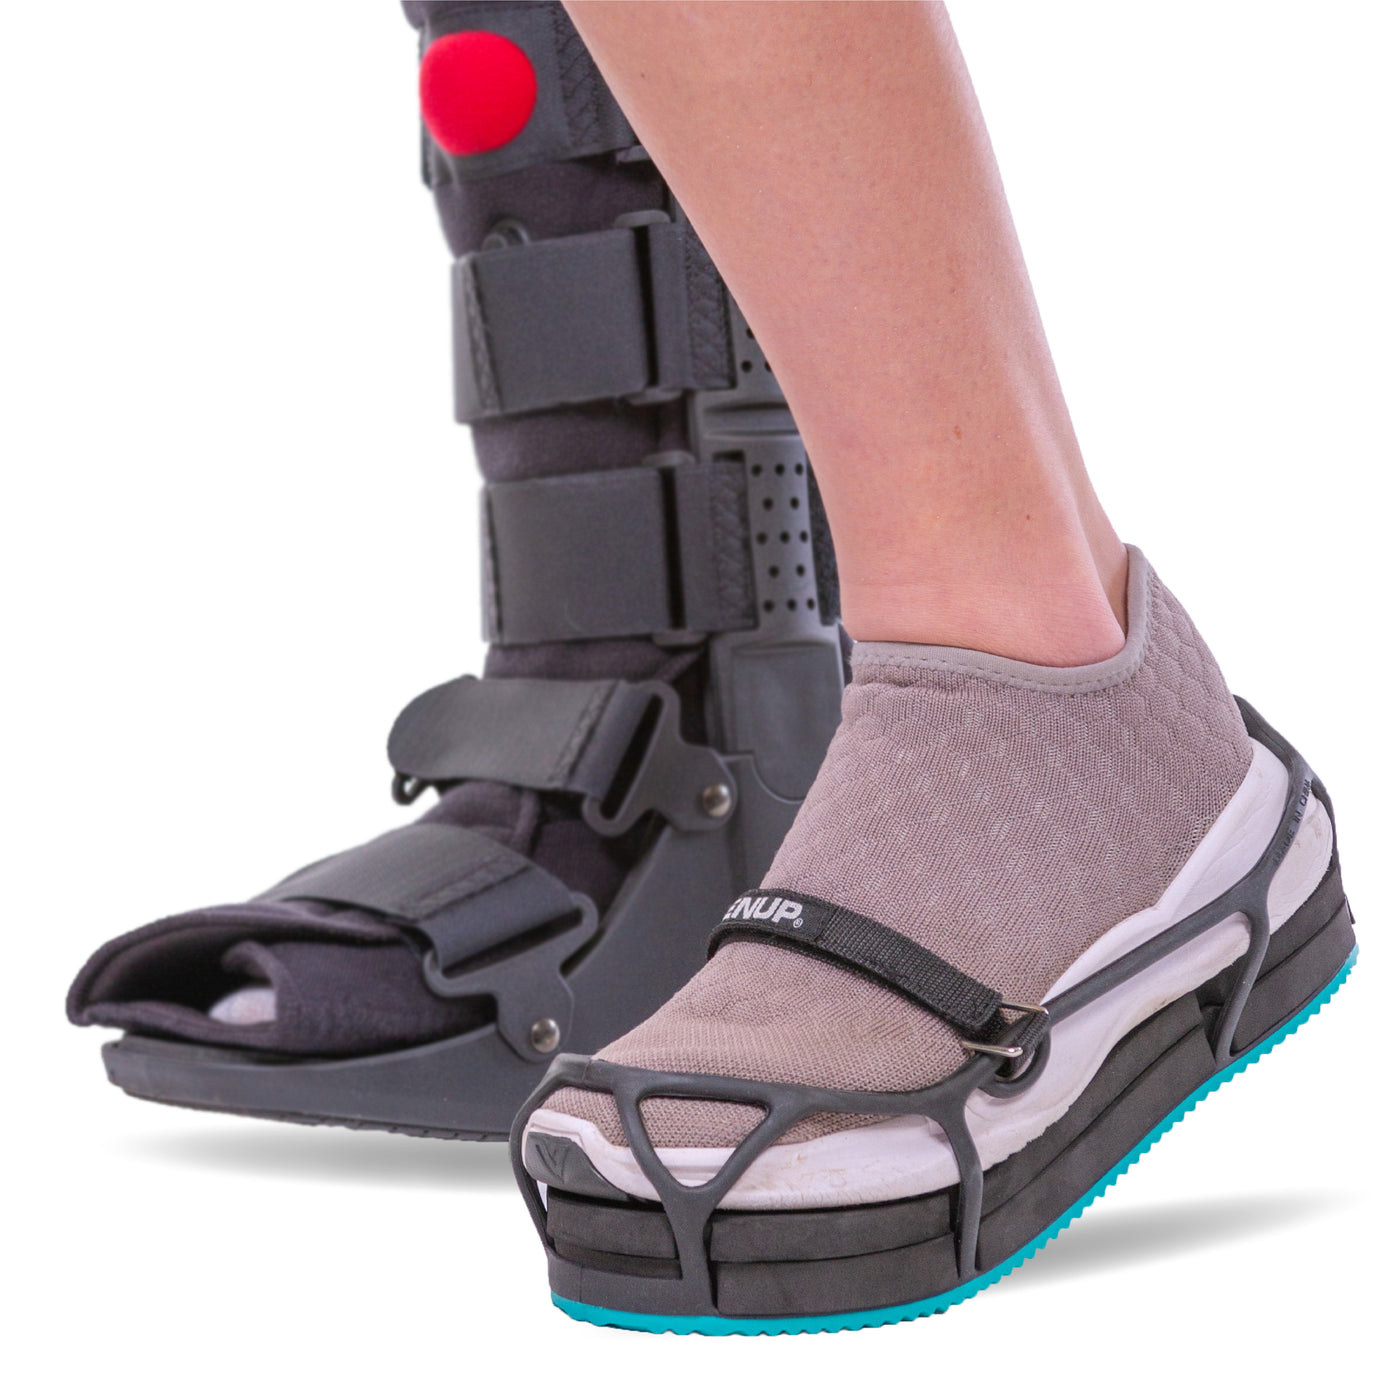 Rubber Heel Lifts for Sale  Orthopedic Shoe Lift Inserts